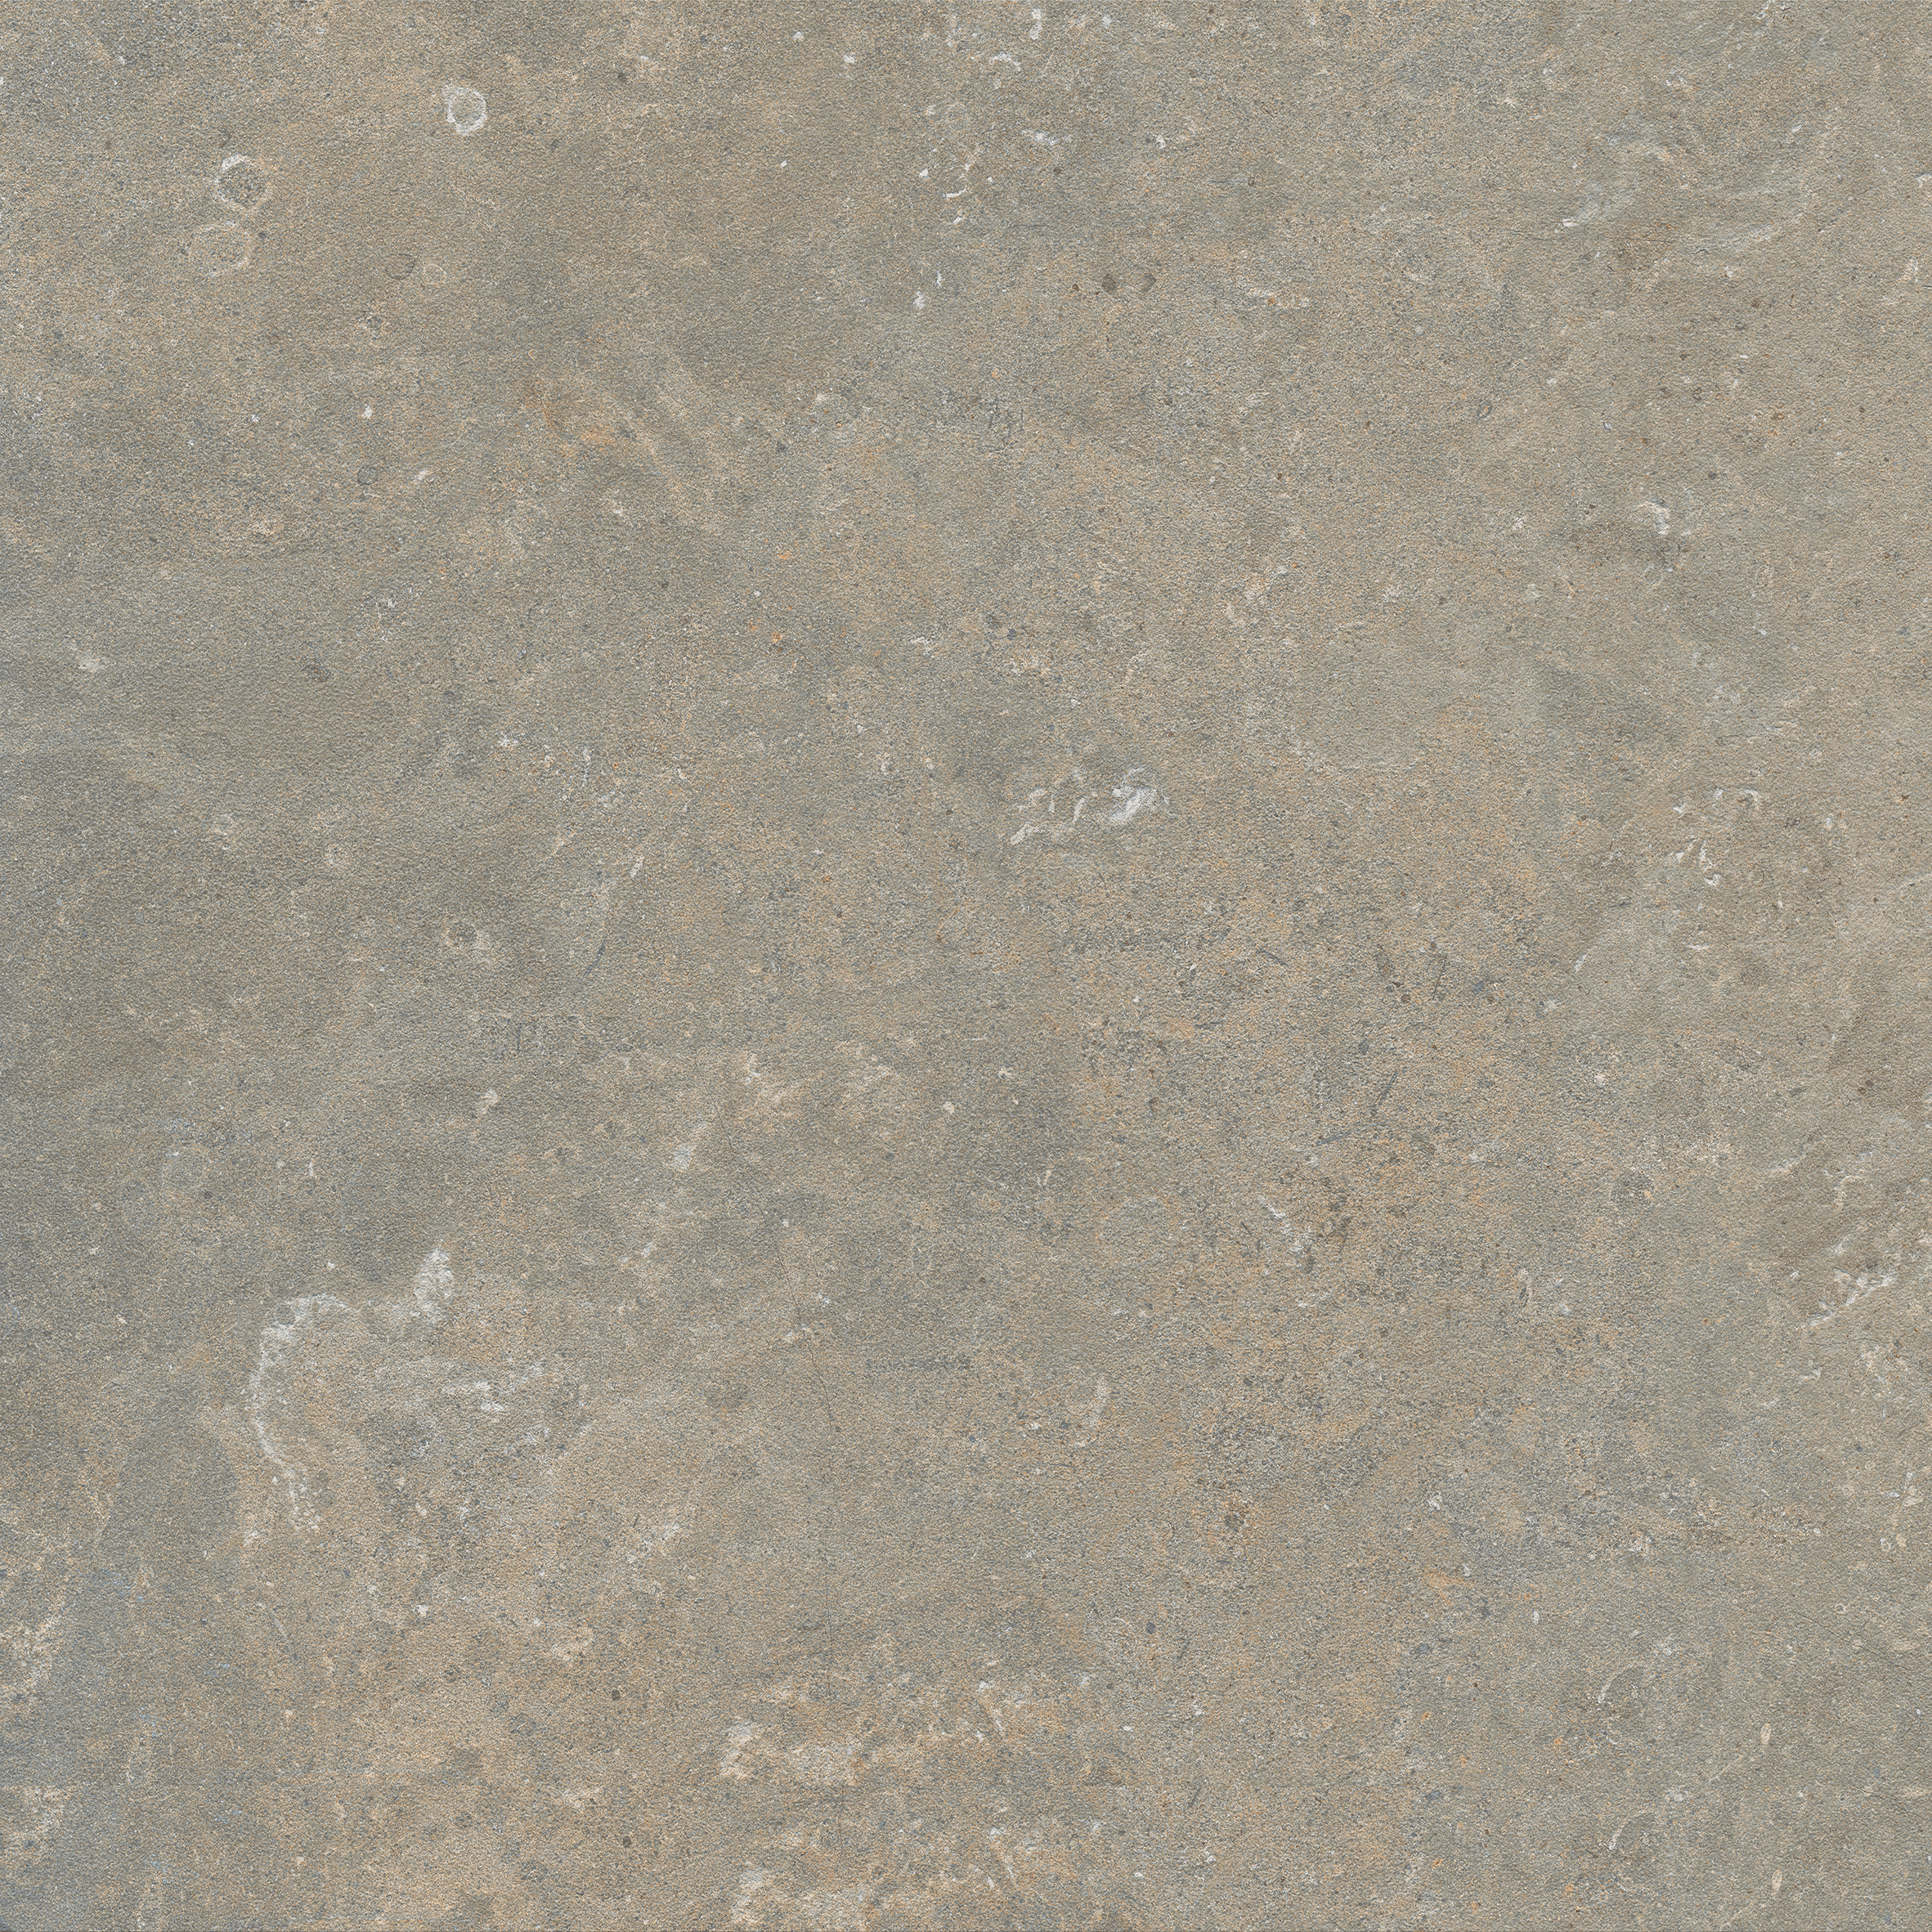 Marca Corona Arkistyle Fossil Naturale – Matt J218 naturale – matt 60x60cm rectified 9mm